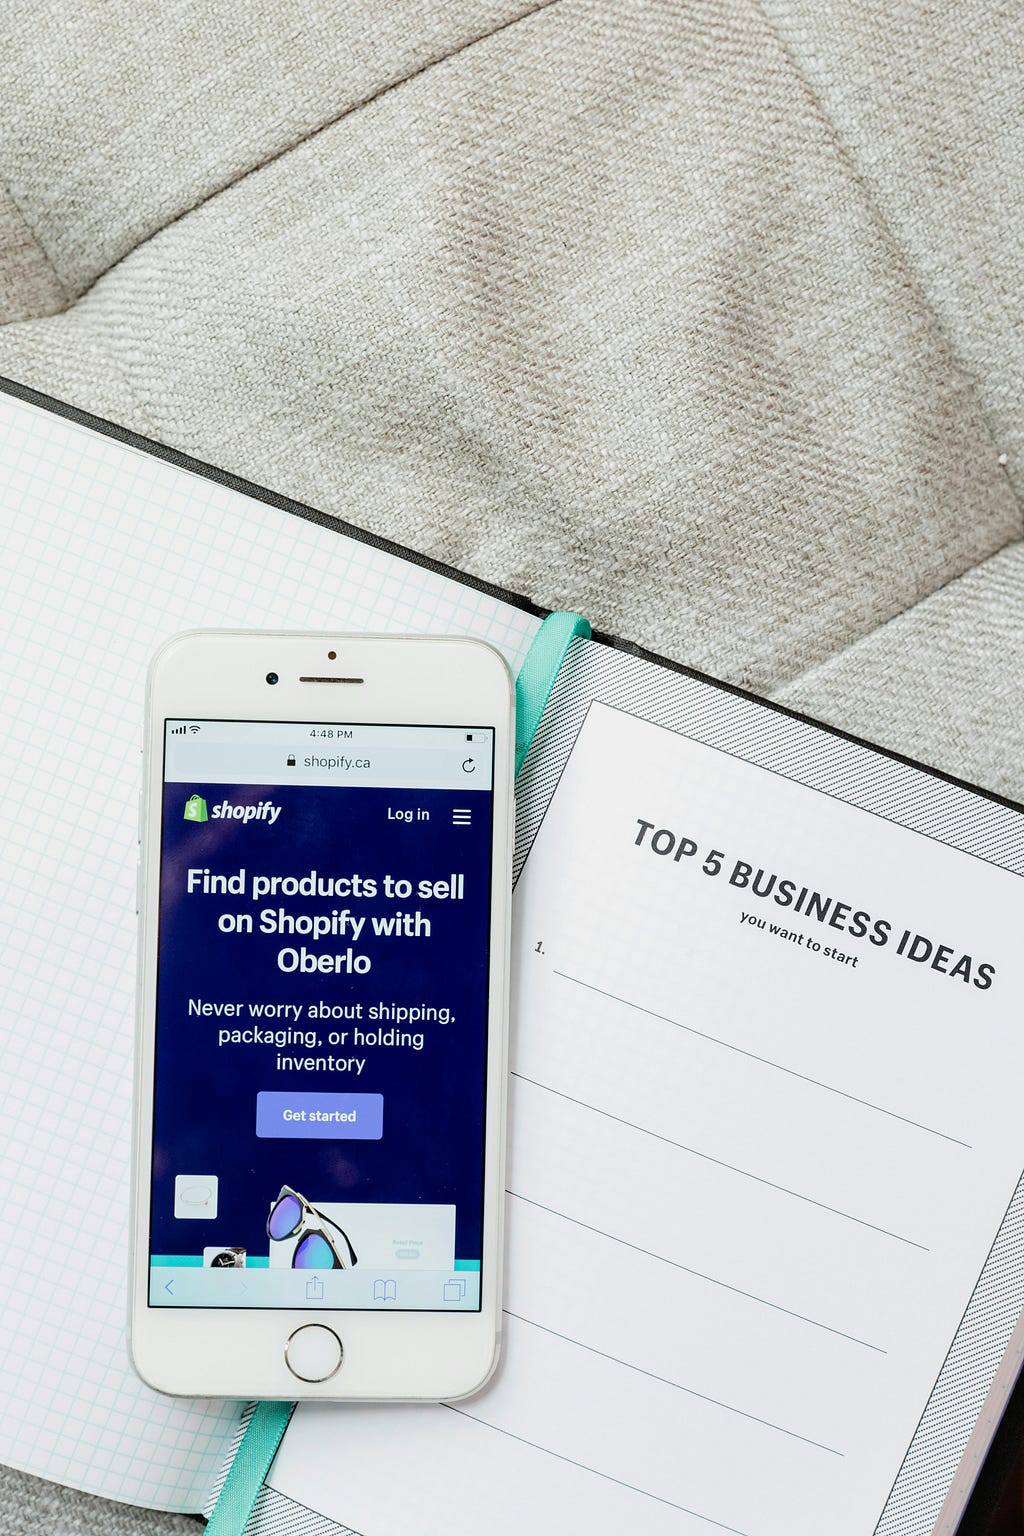 a phone on top of a book written ‘Top 5 Business Ideas’